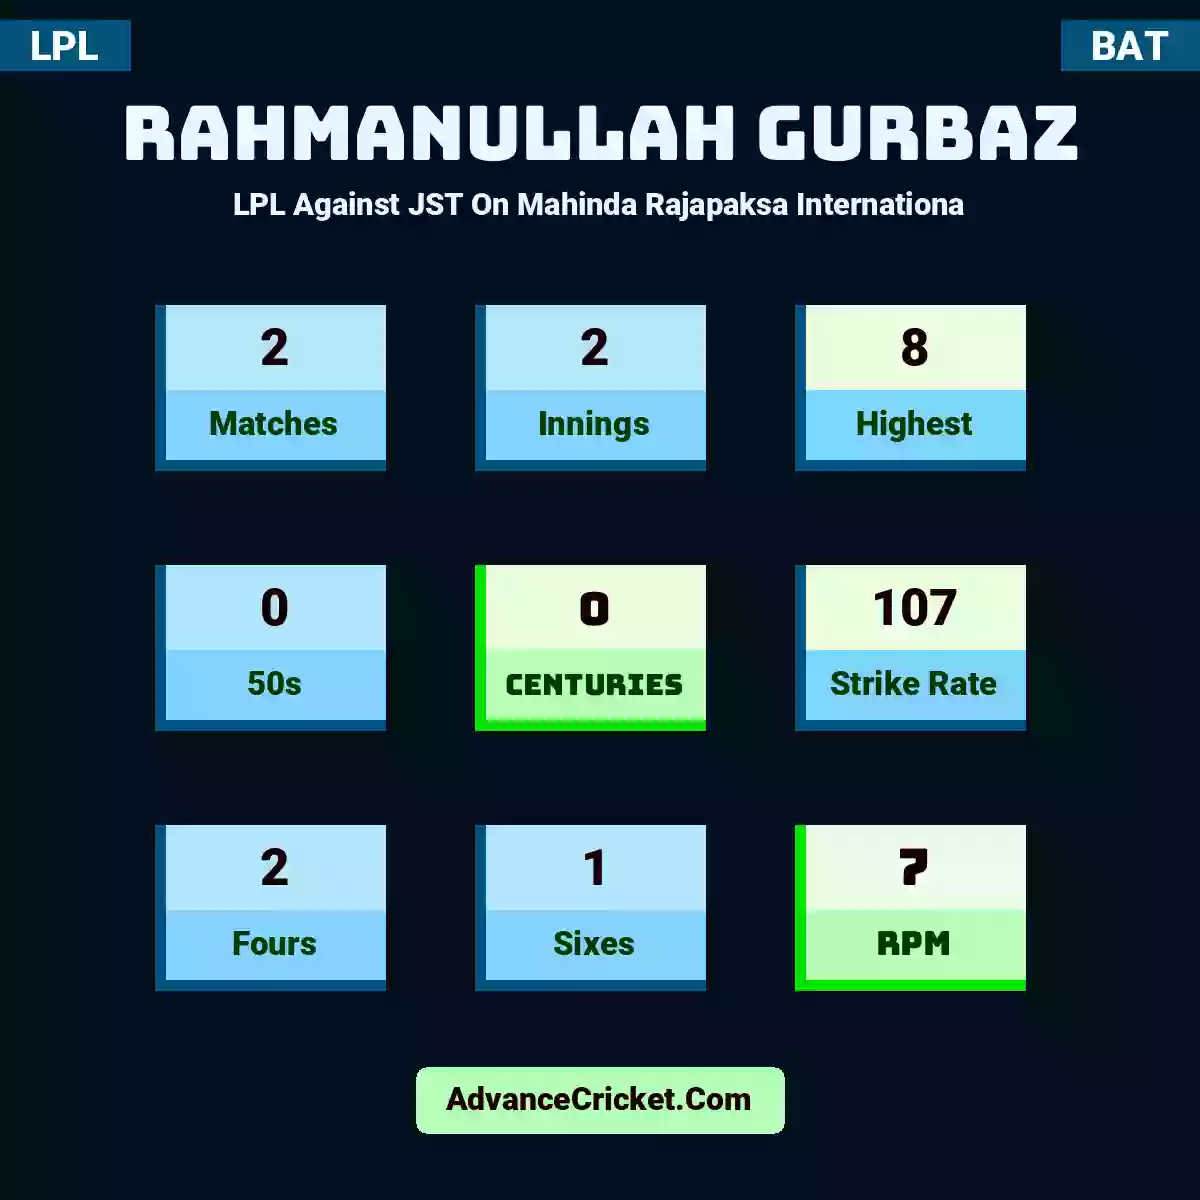 Rahmanullah Gurbaz LPL  Against JST On Mahinda Rajapaksa Internationa, Rahmanullah Gurbaz played 2 matches, scored 8 runs as highest, 0 half-centuries, and 0 centuries, with a strike rate of 107. R.Gurbaz hit 2 fours and 1 sixes, with an RPM of 7.